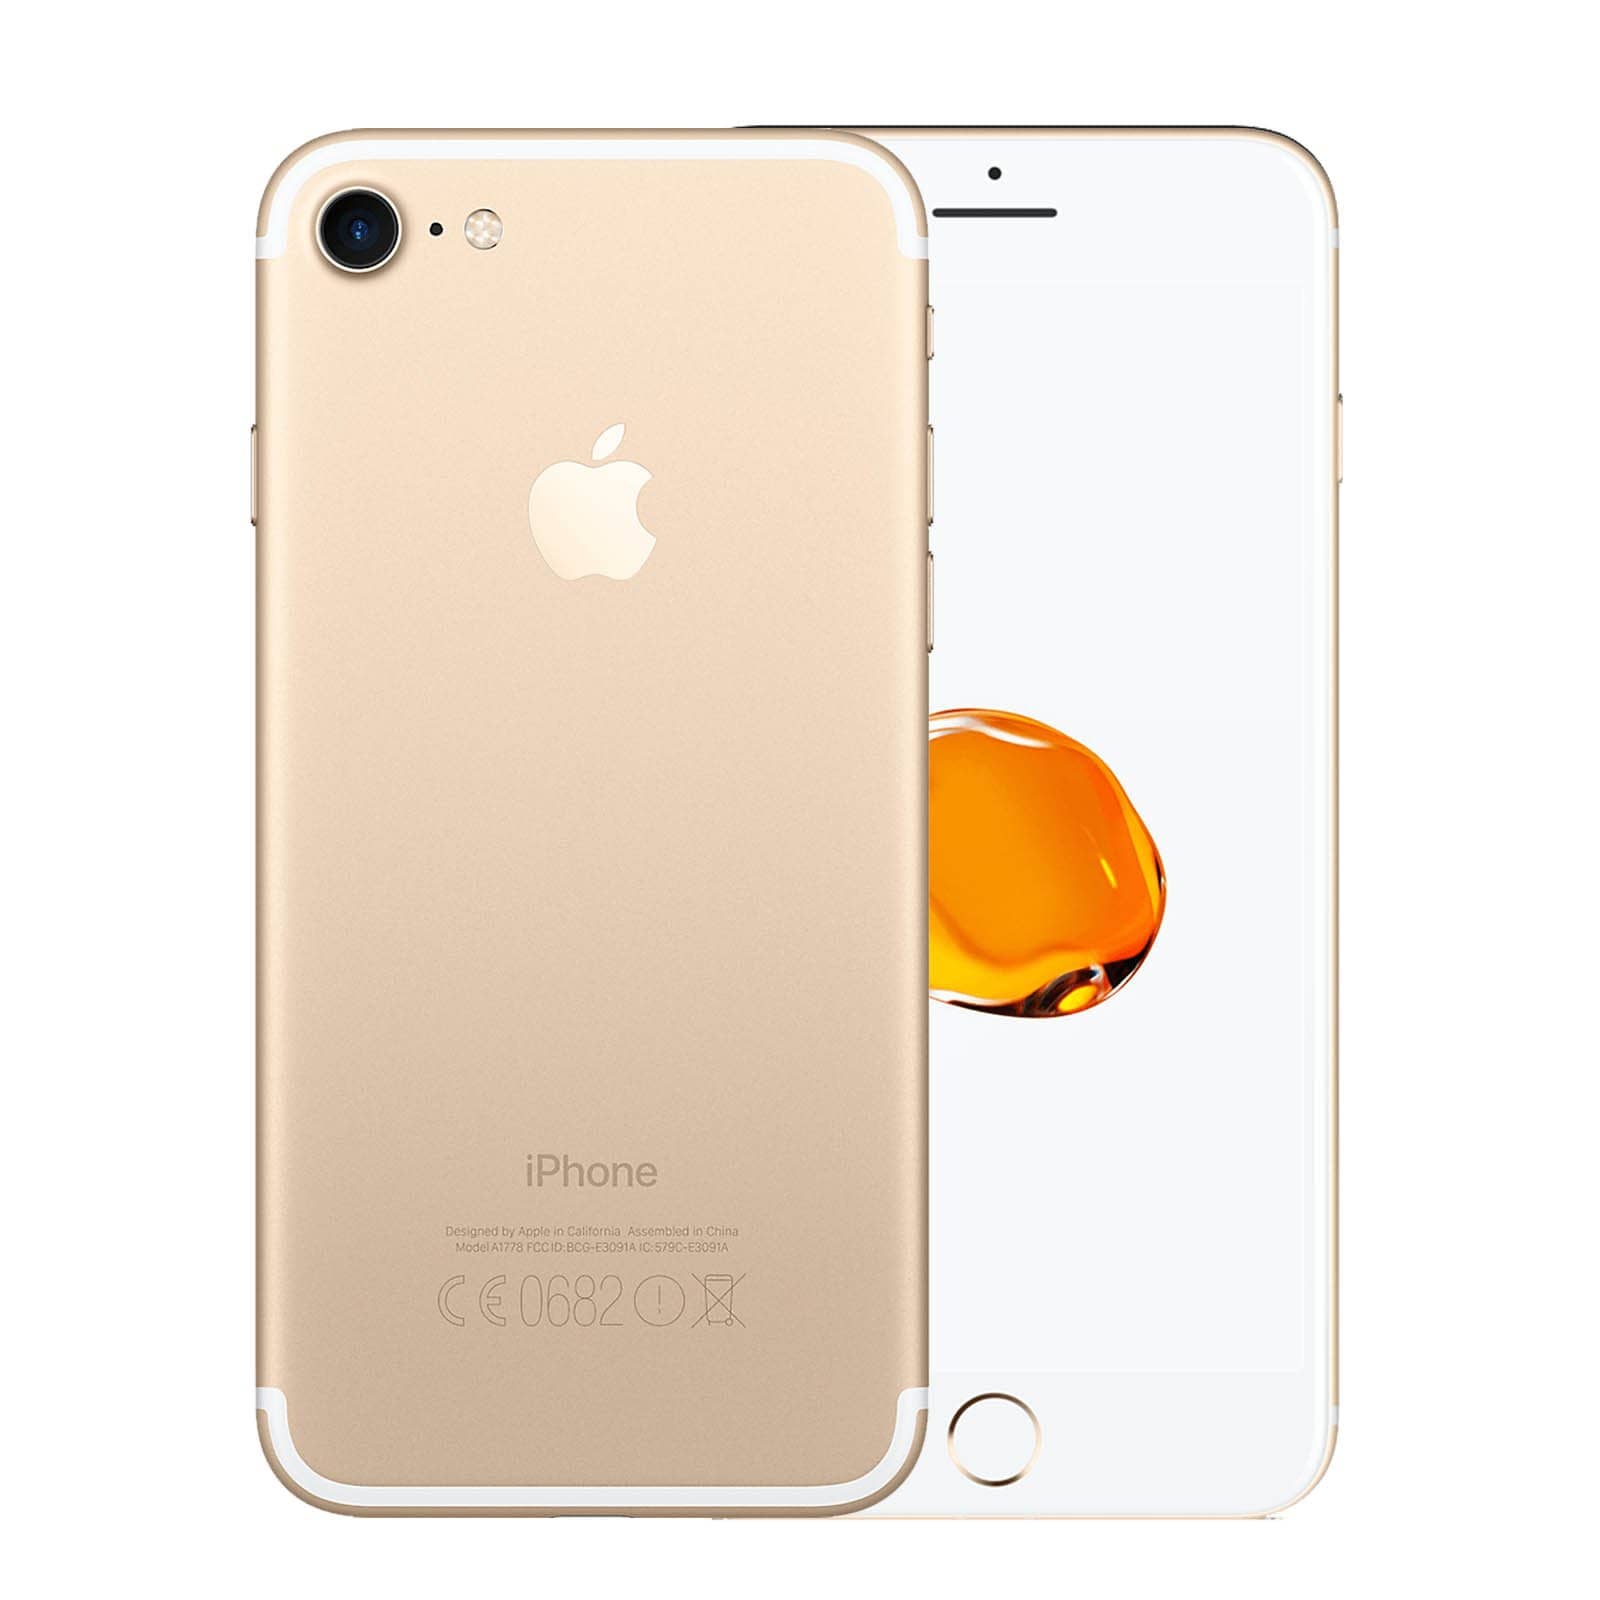 Apple iPhone 7 128GB Gold Pristine - Unlocked 128GB Gold Pristine